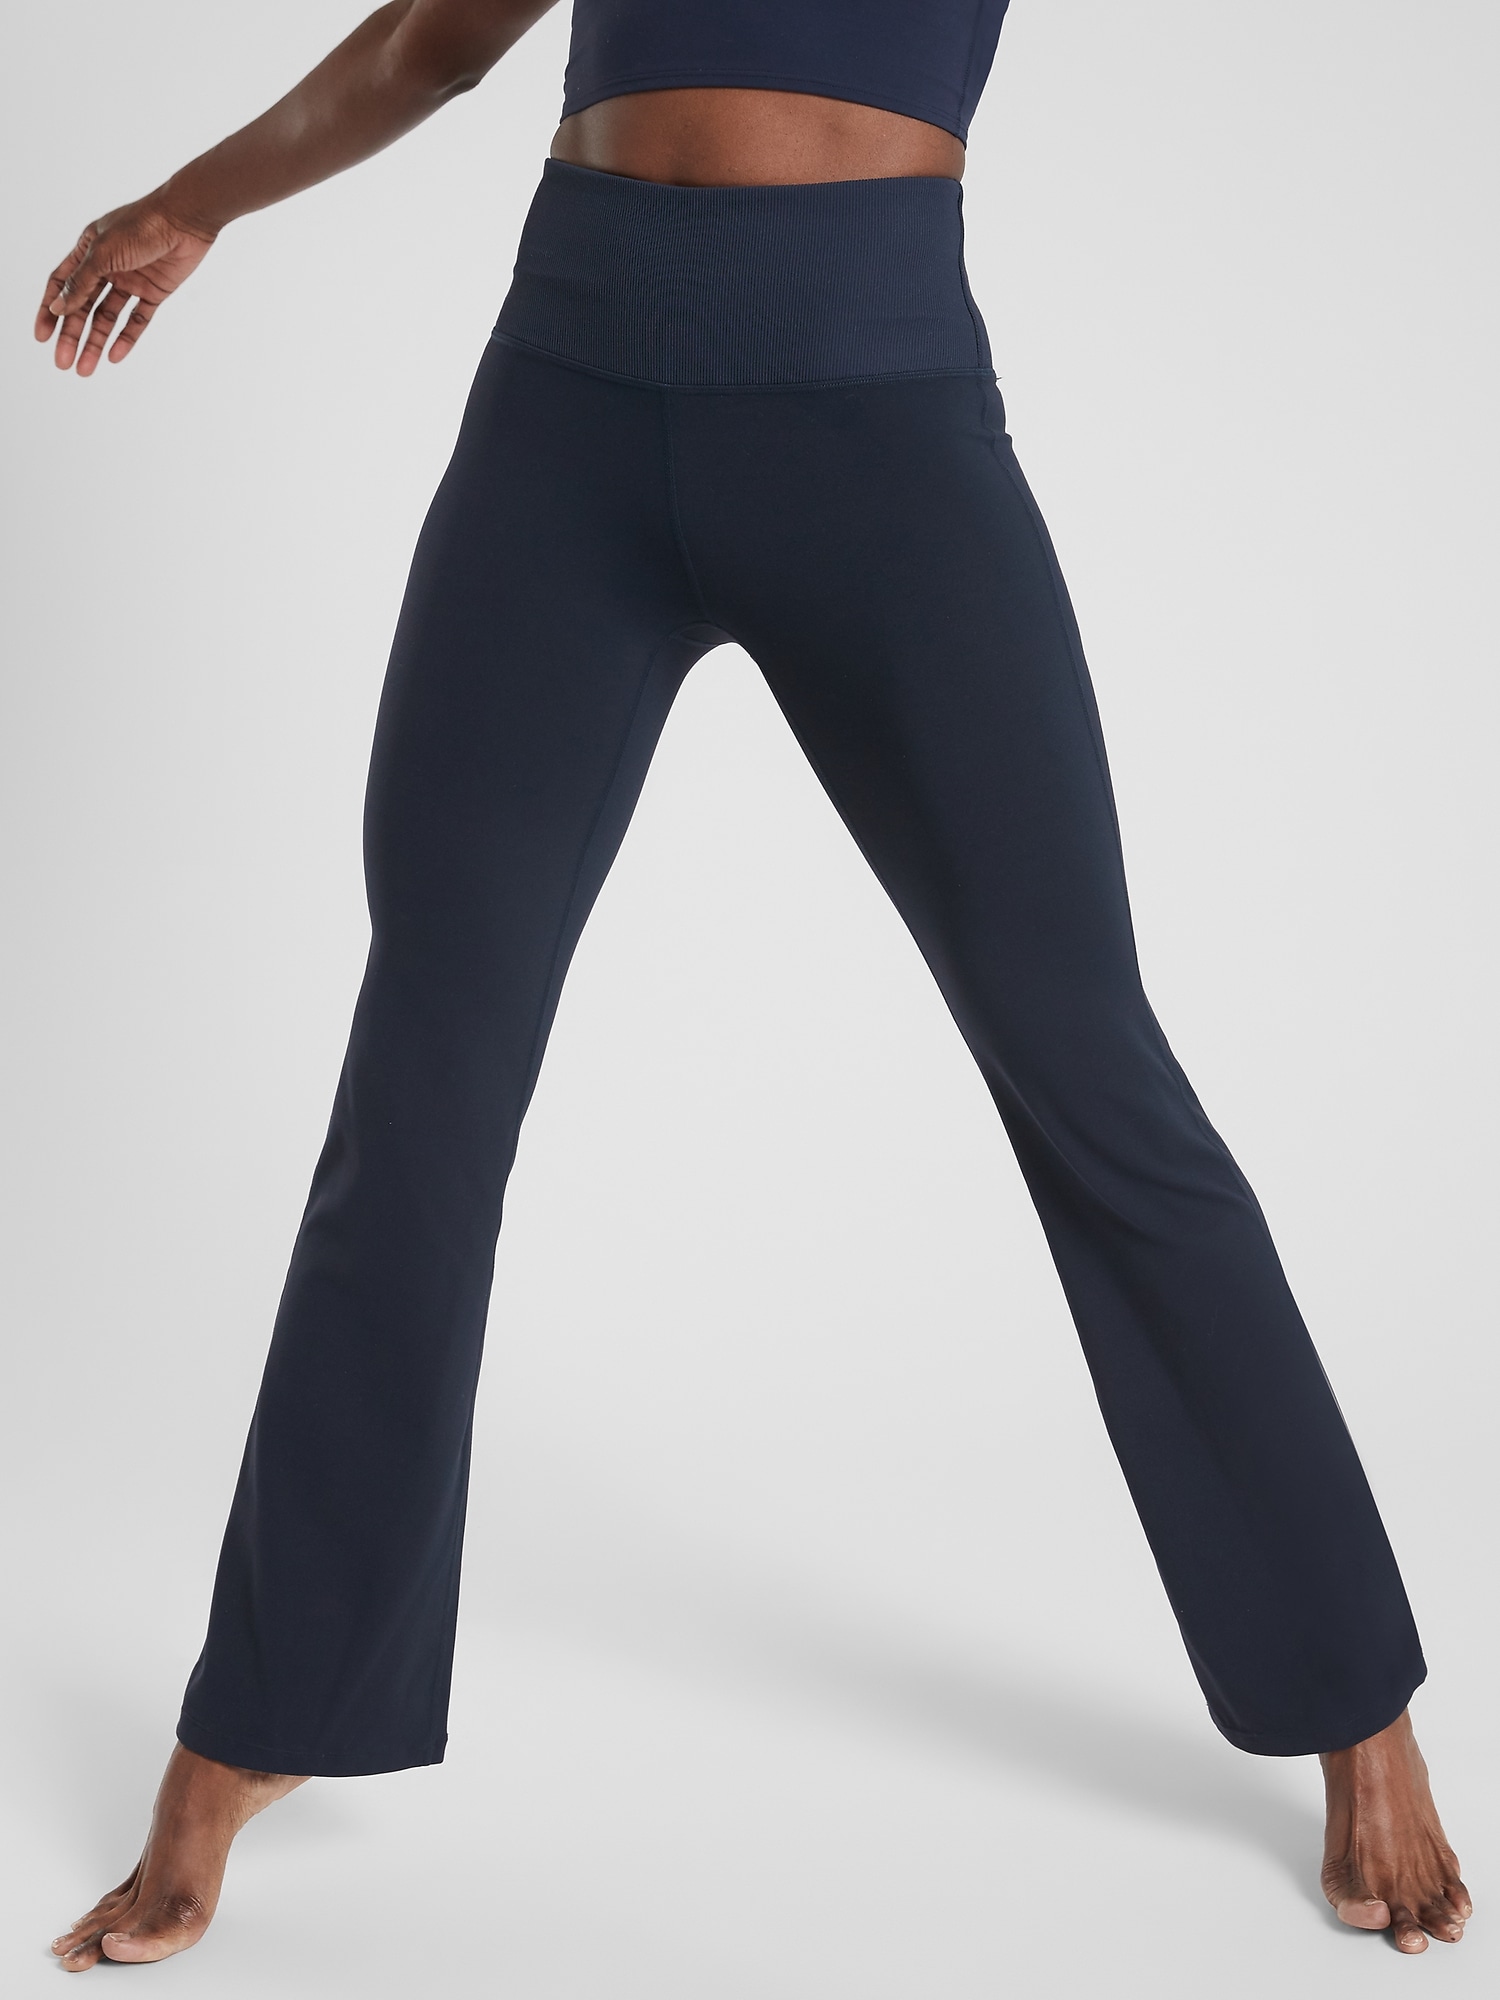 Buy YOHOYOHA Plus Size Dress Yoga Pants High Waisted Stretch